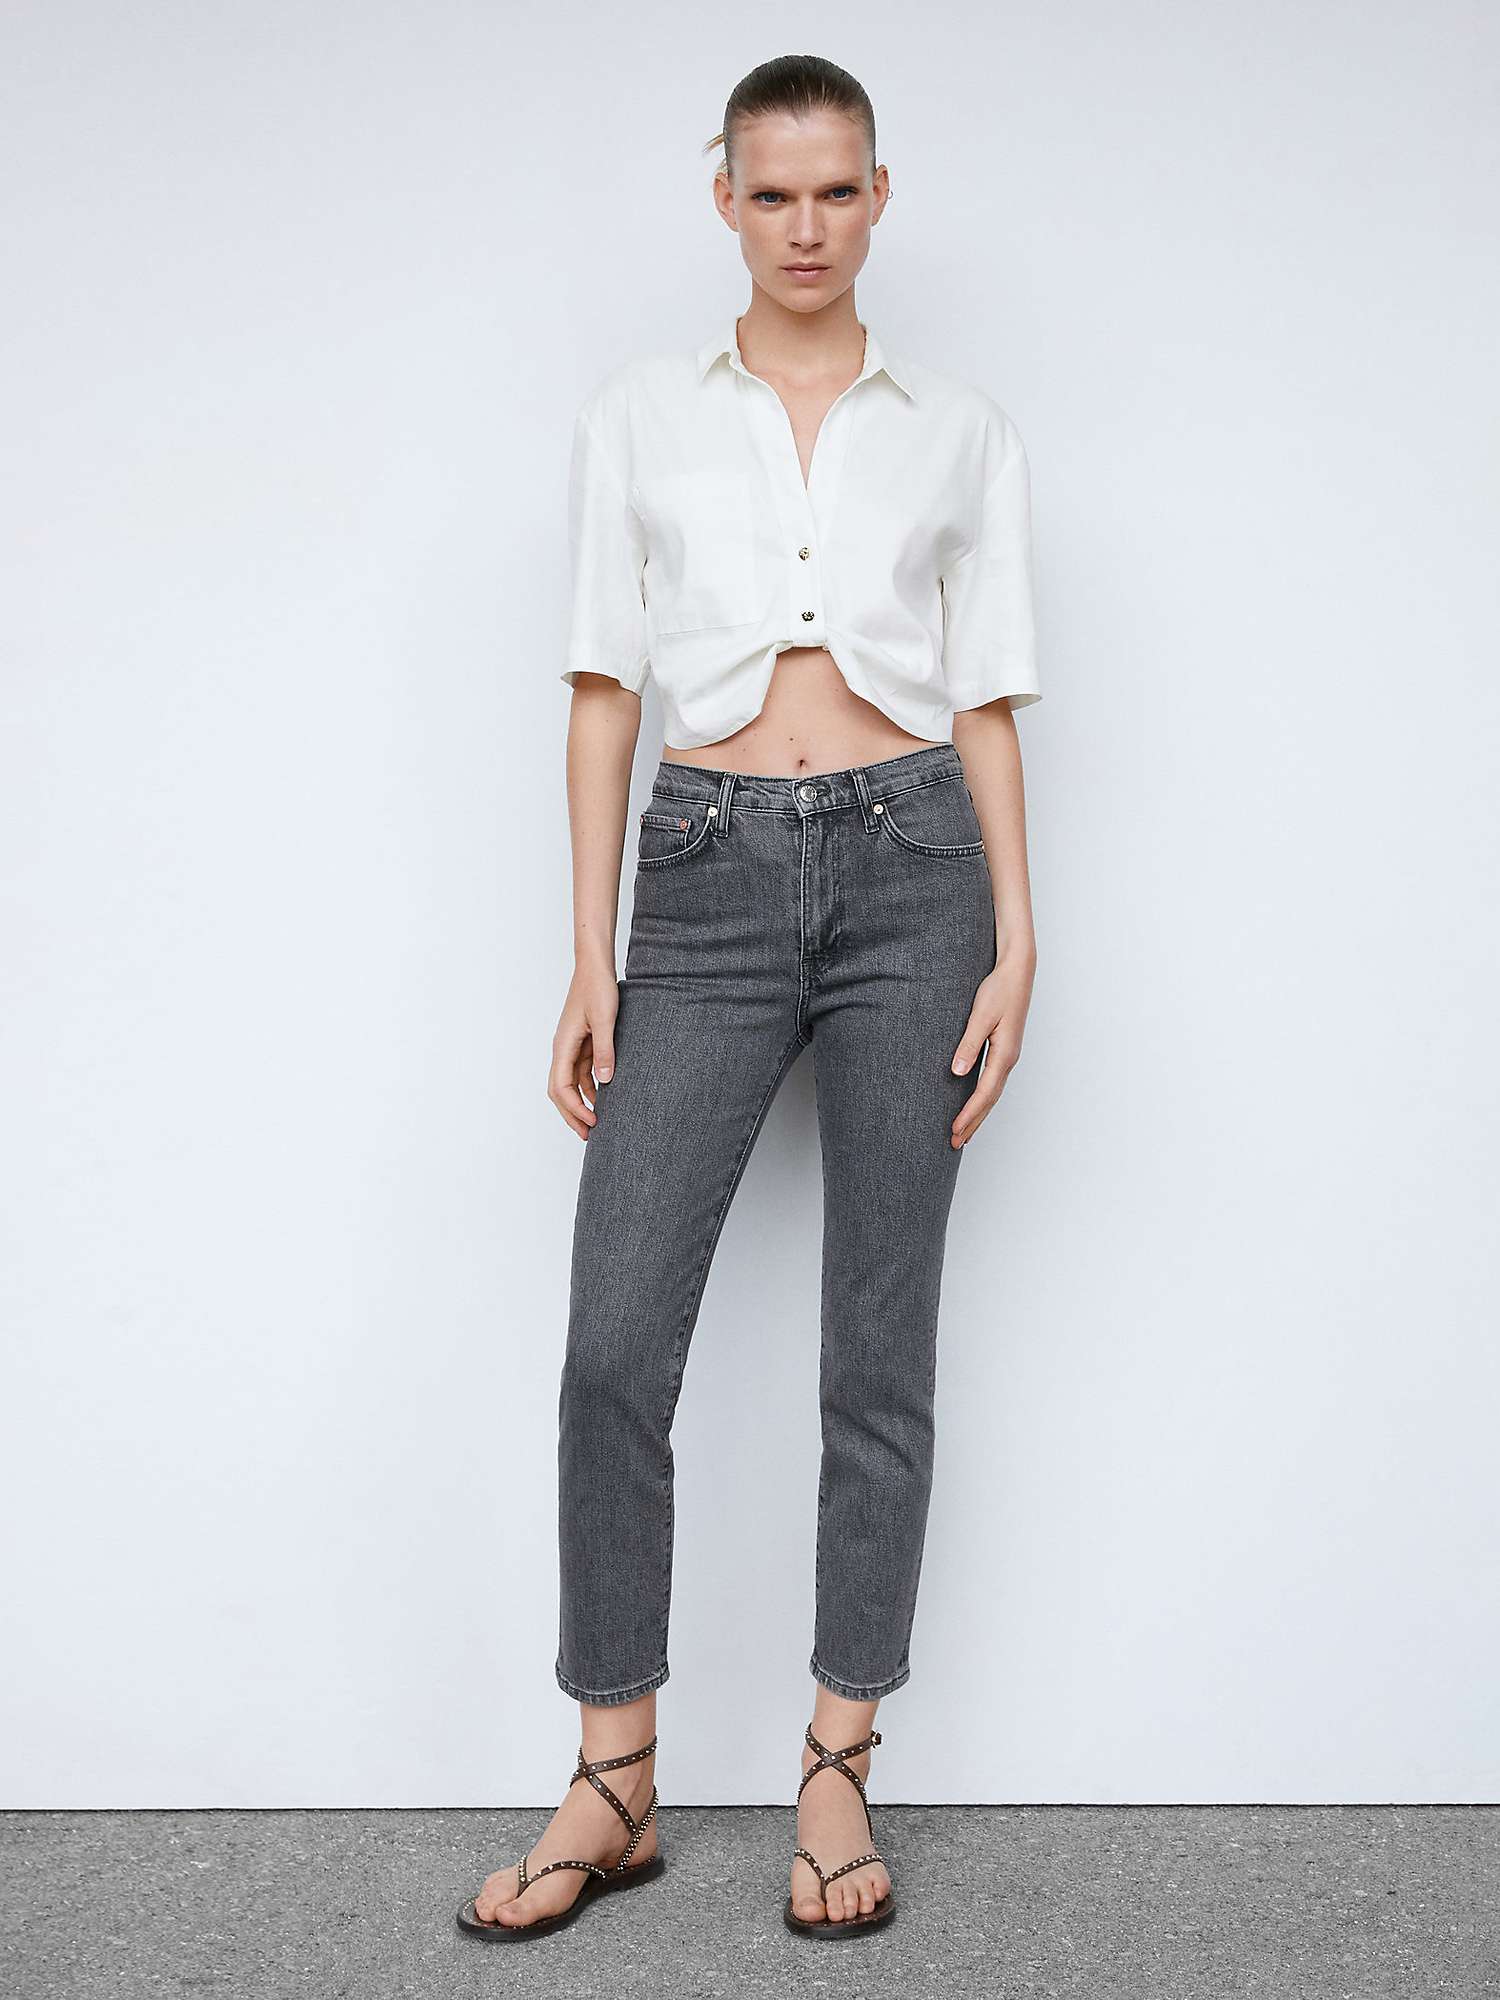 Mango Claudia Slim Cropped Jeans, Open Grey at John Lewis & Partners